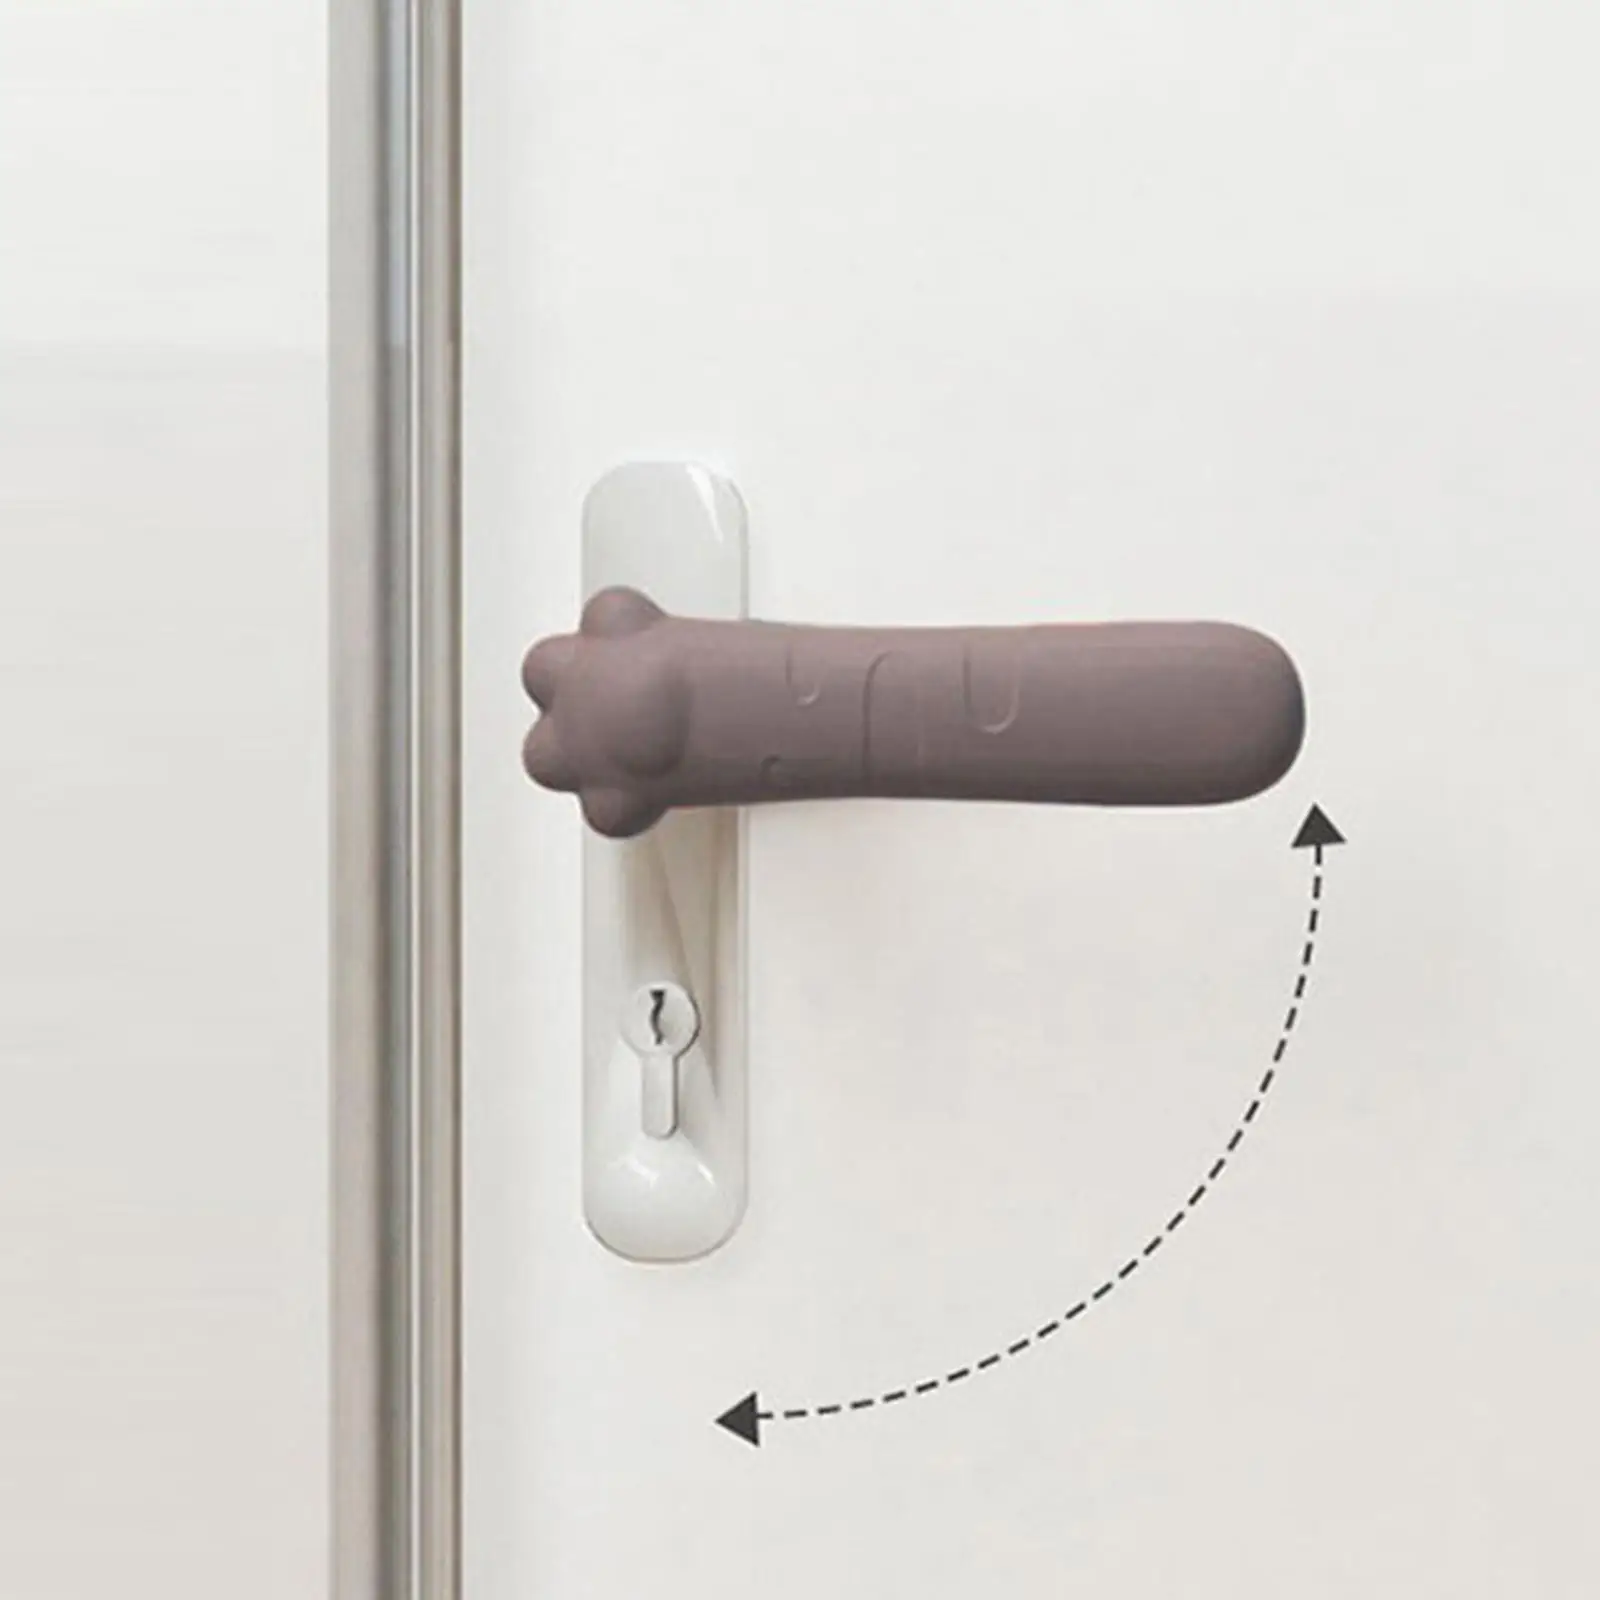 Silicone Door Handle Protective Cover Protector Anti Static Noiseless Door Handle Safety Guard Door Knob Cover for Kindergarten